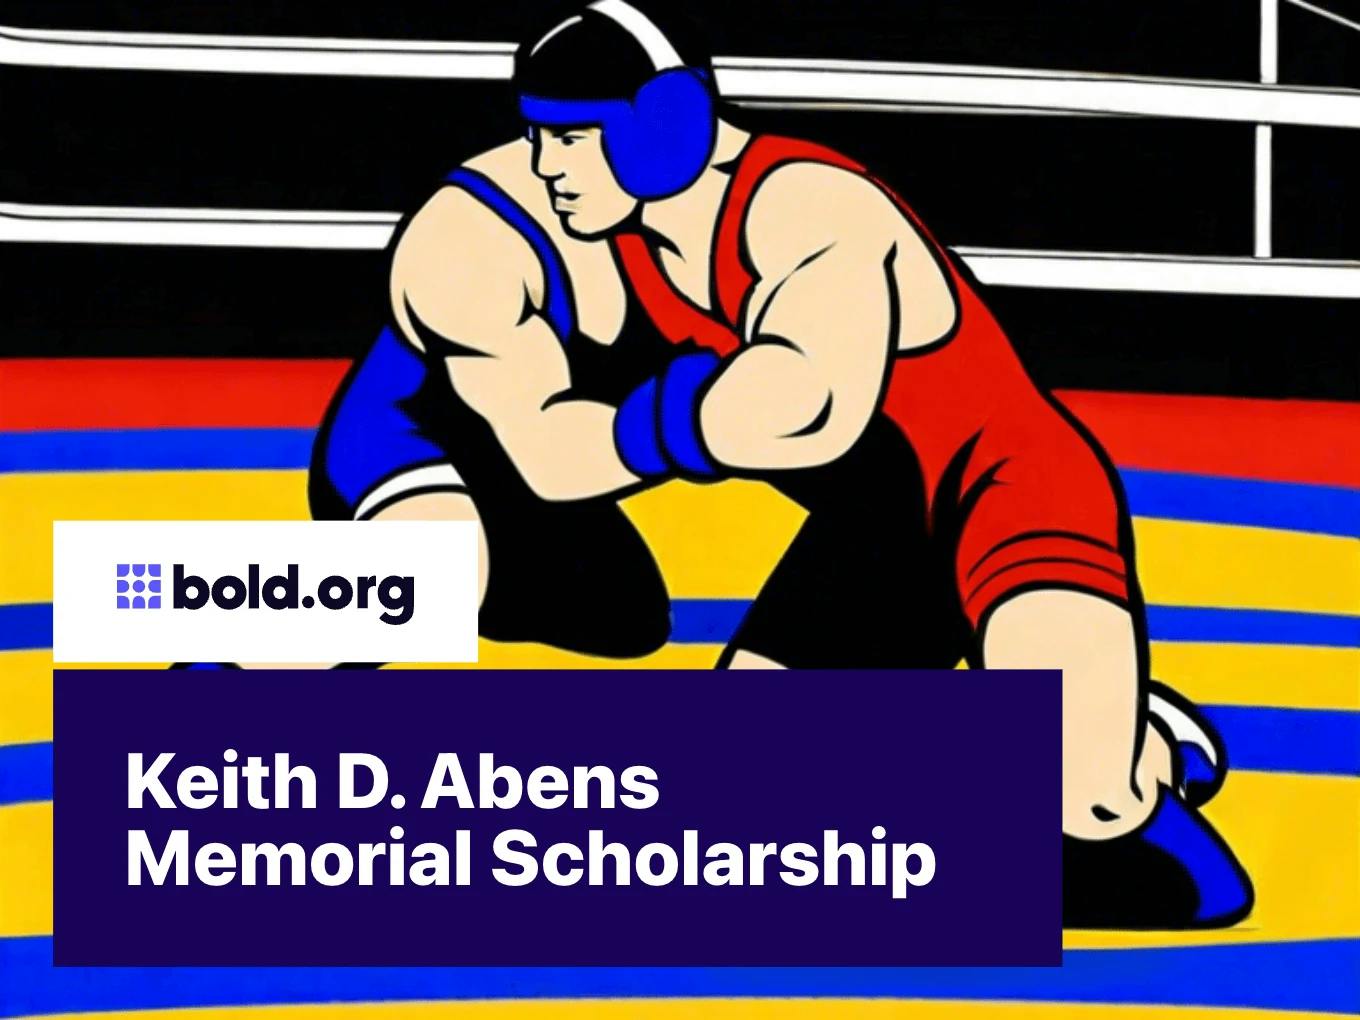 Keith D. Abens Memorial Scholarship